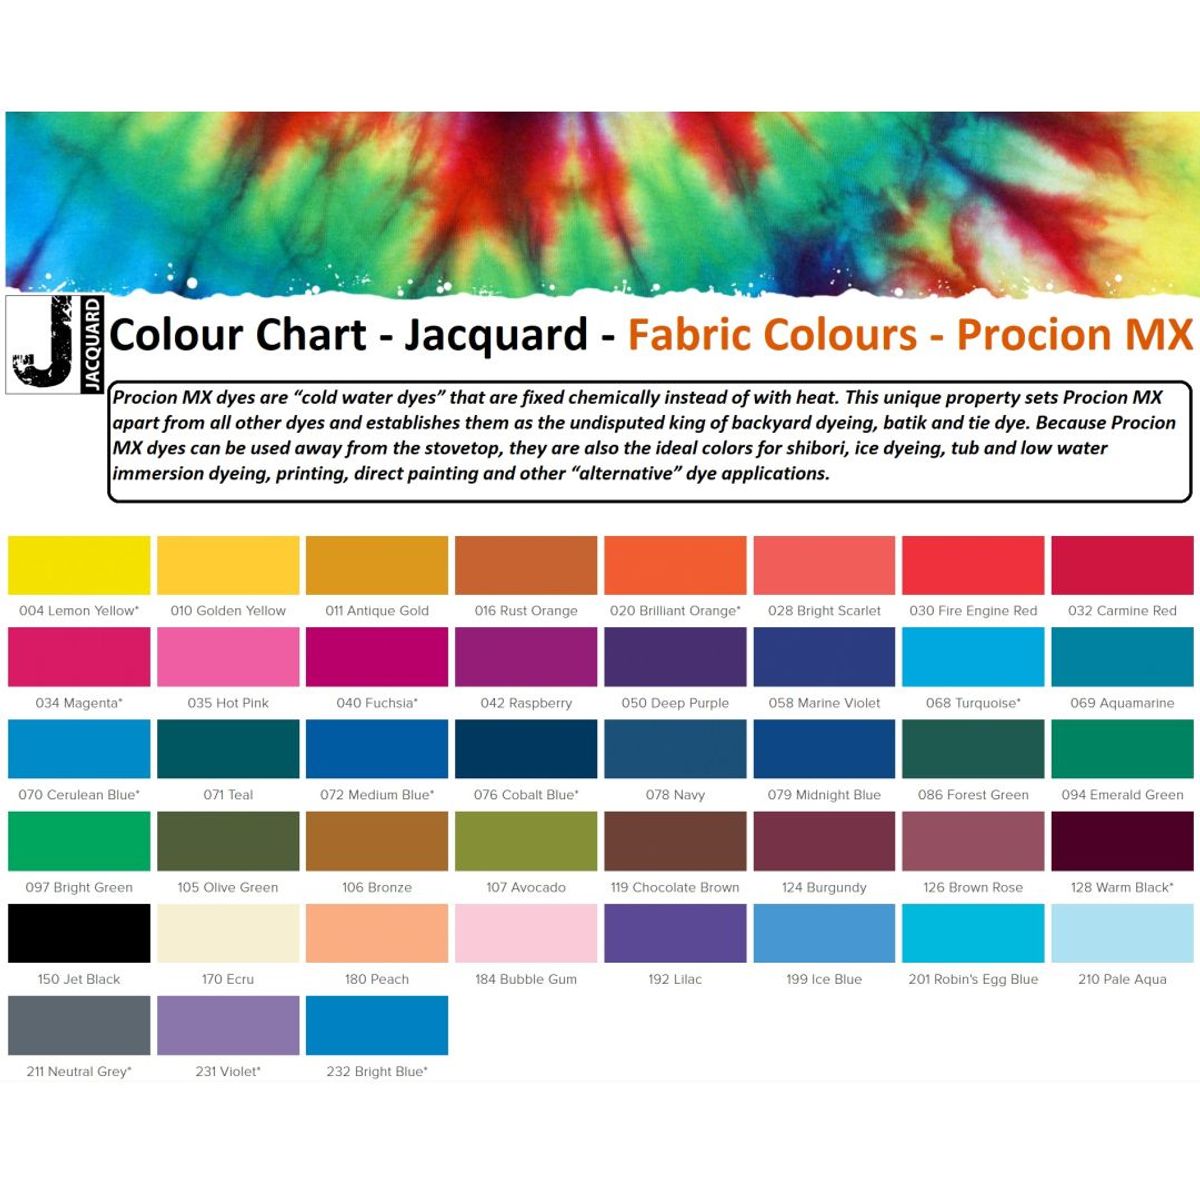 Jacquard - Procion MX Dye - Fabric Textile - Avocado 107